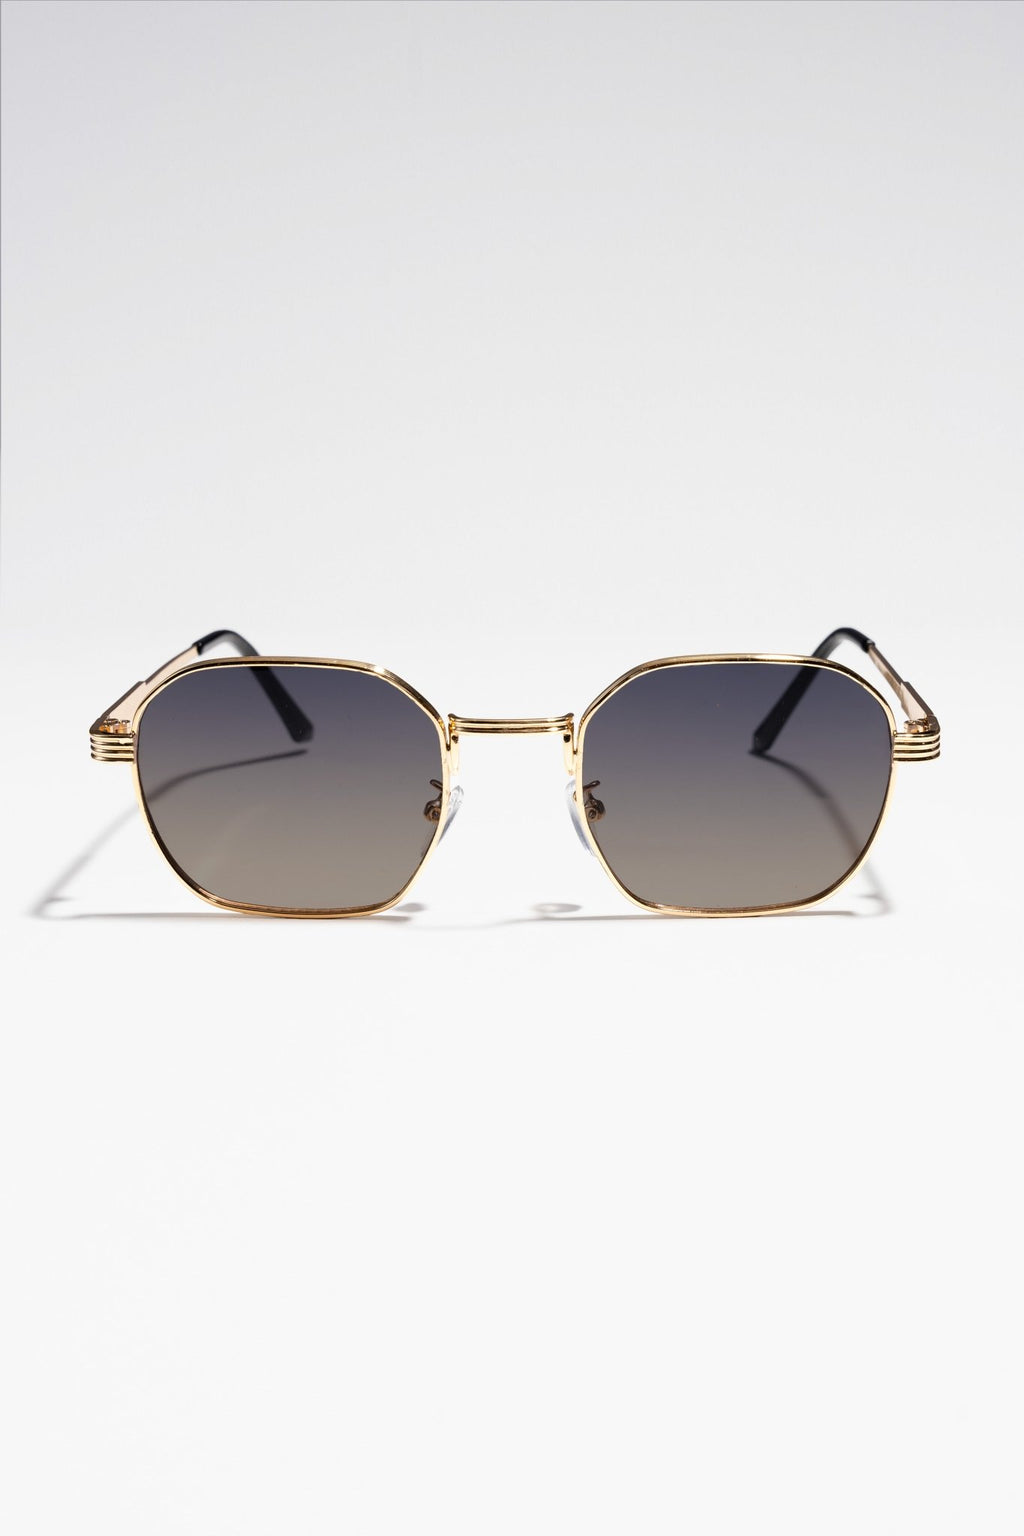 Damian Sunglasses - Gold/Gray